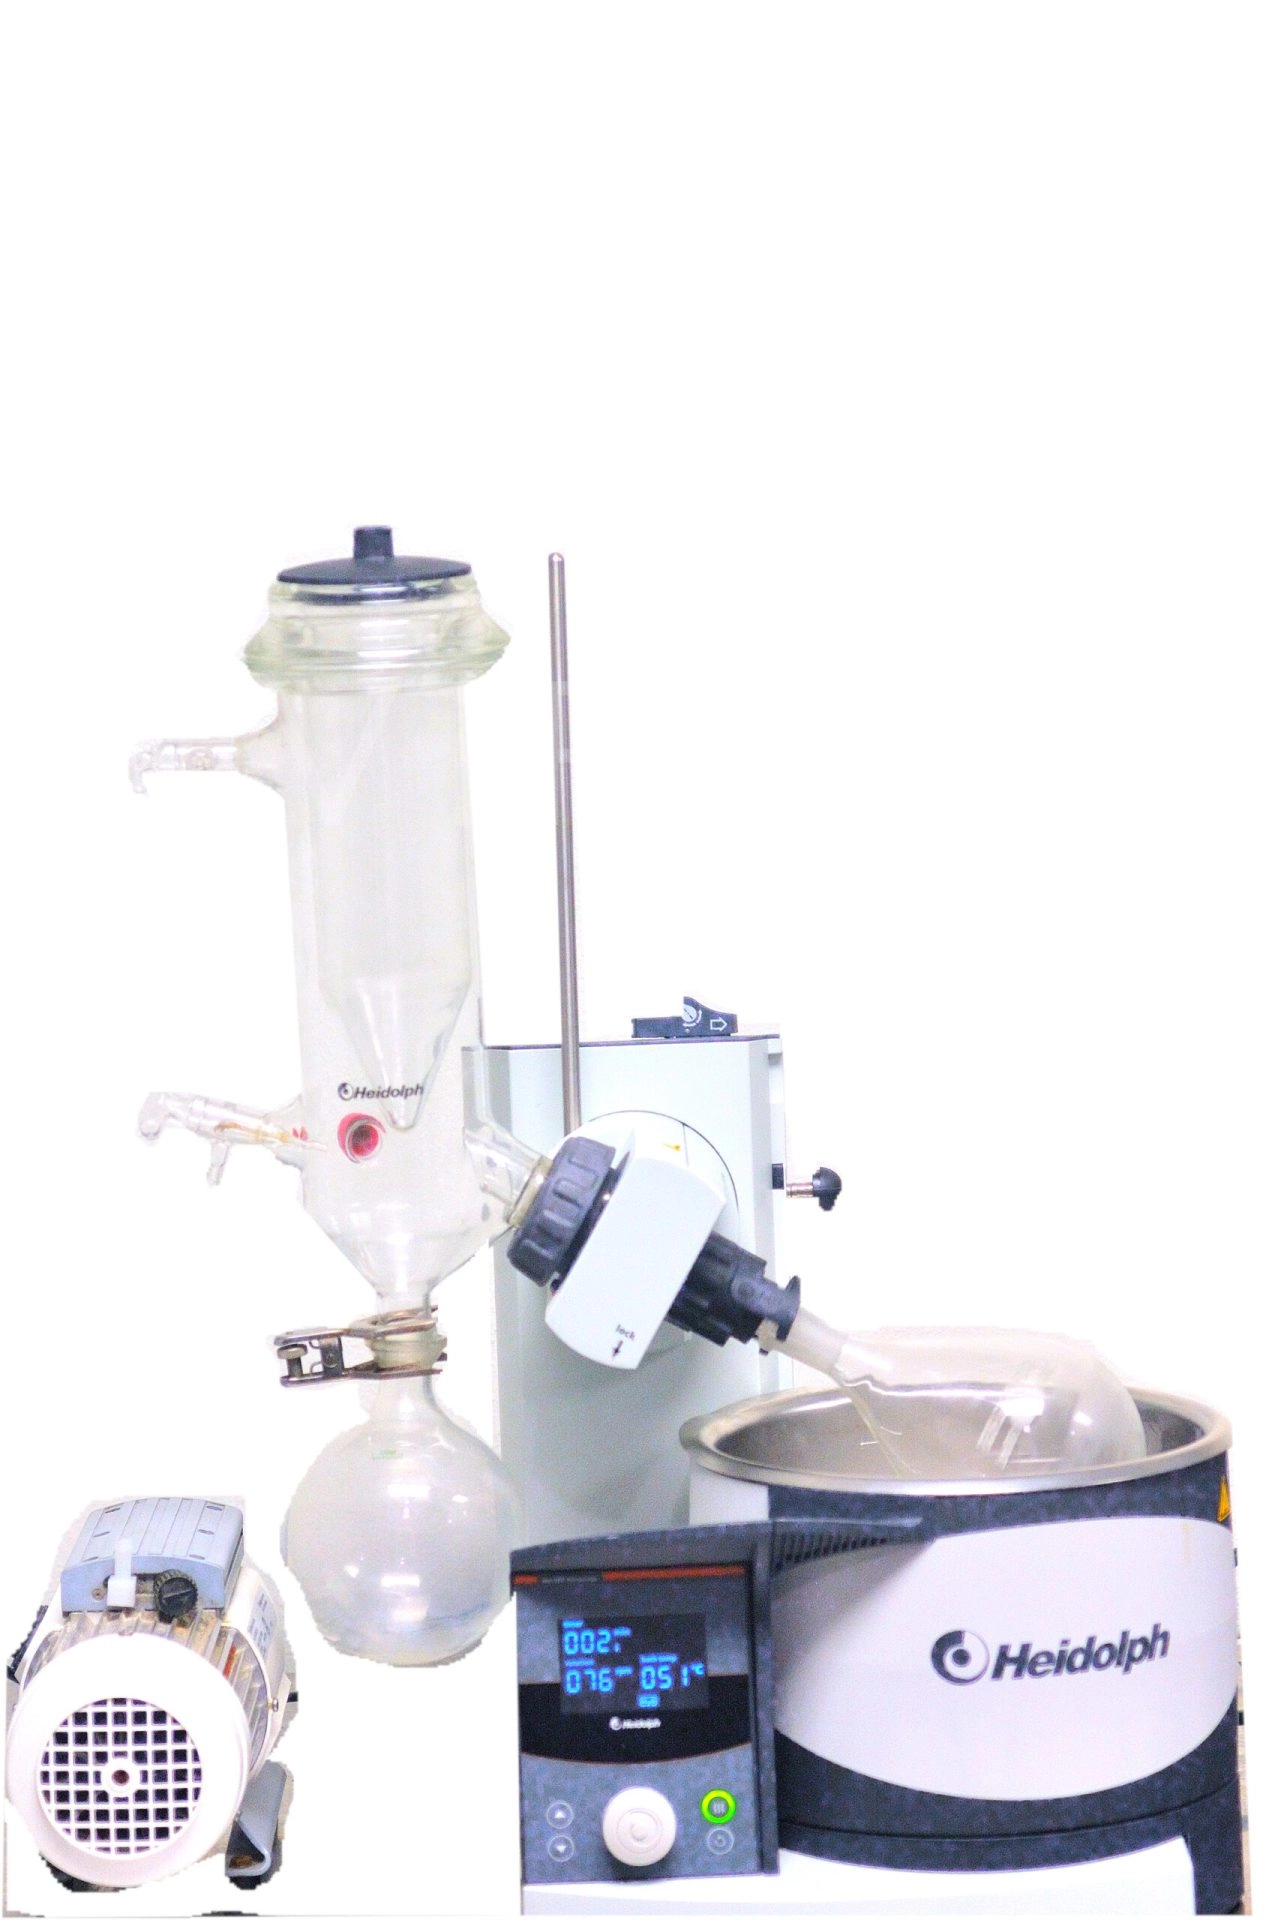 Heidolph Hei-VAP Advantage Evaporator Including Heidolph Pump, Glassware